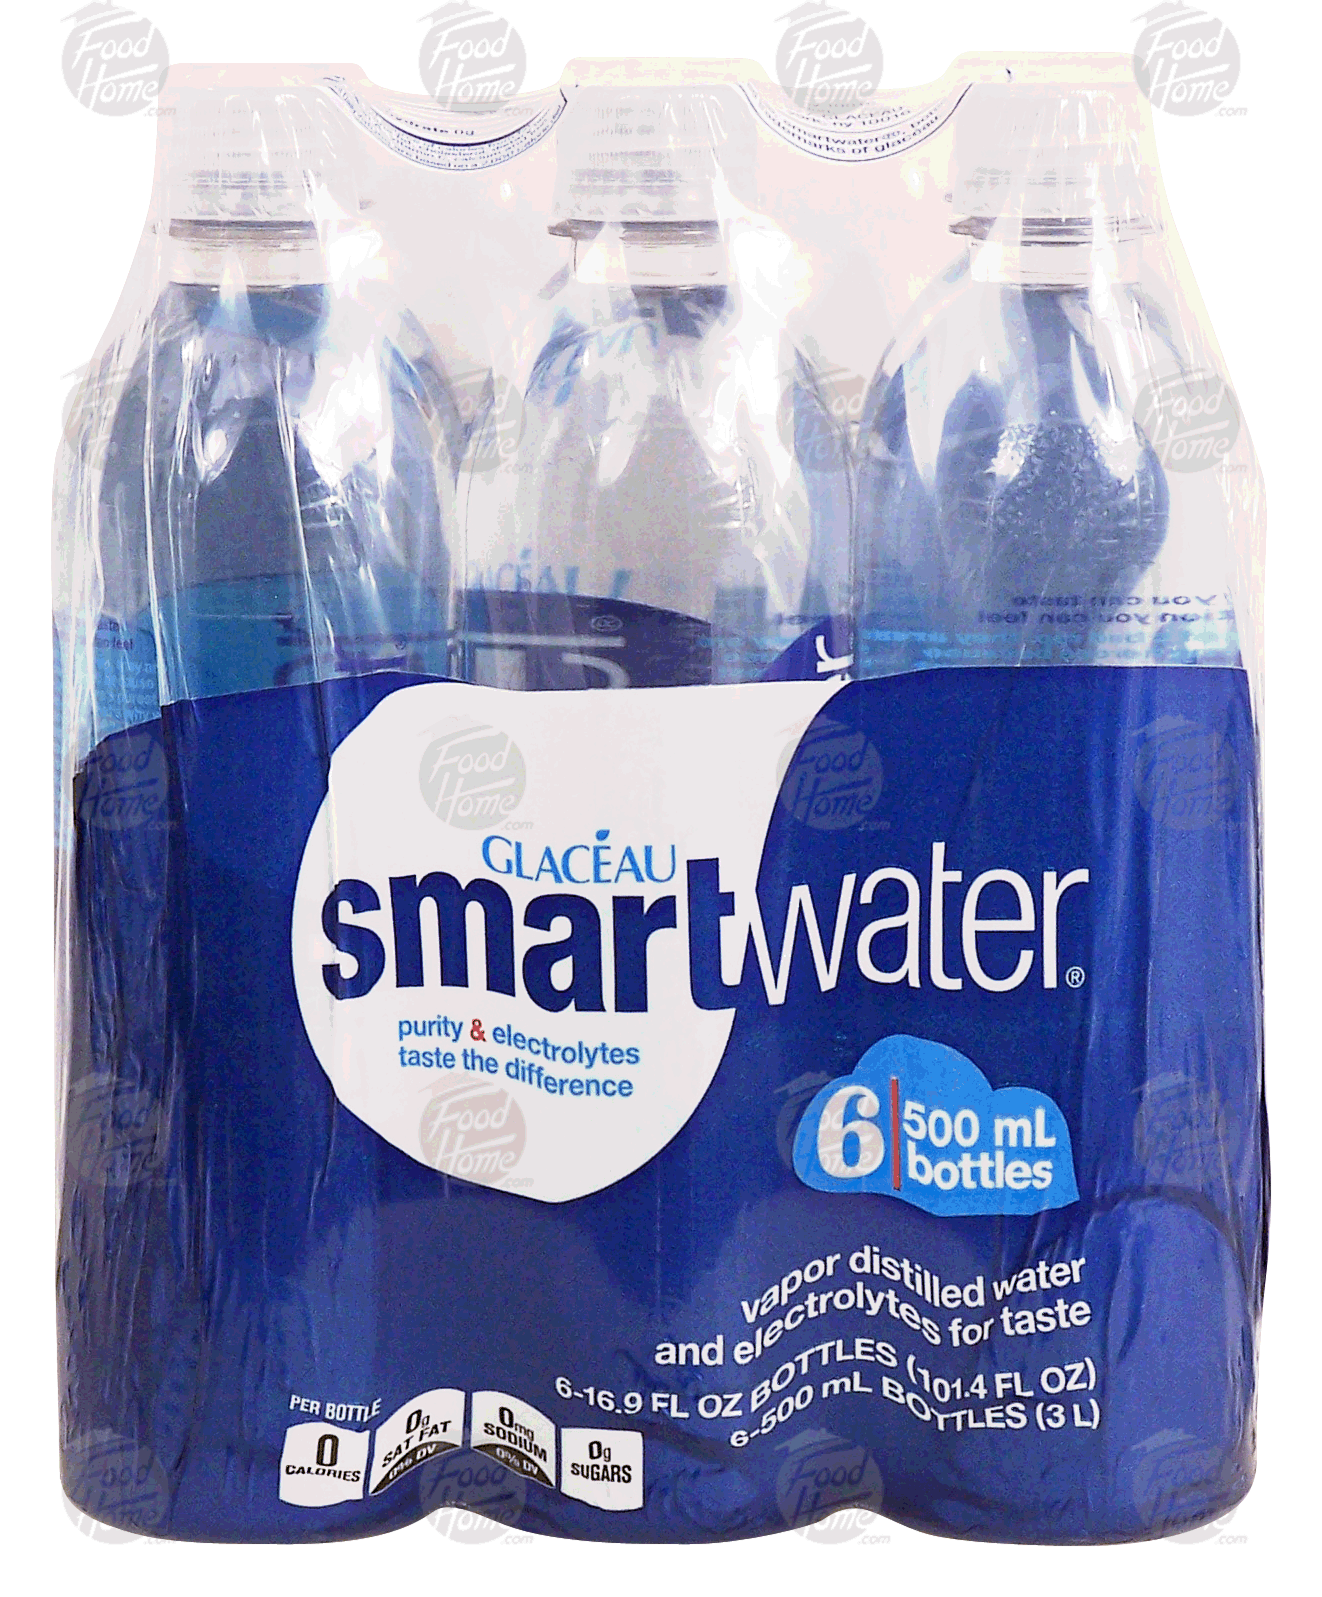 Glaceau smart water vapor distilled water and electrolytes for taste, 6- 1 liter bottles Full-Size Picture